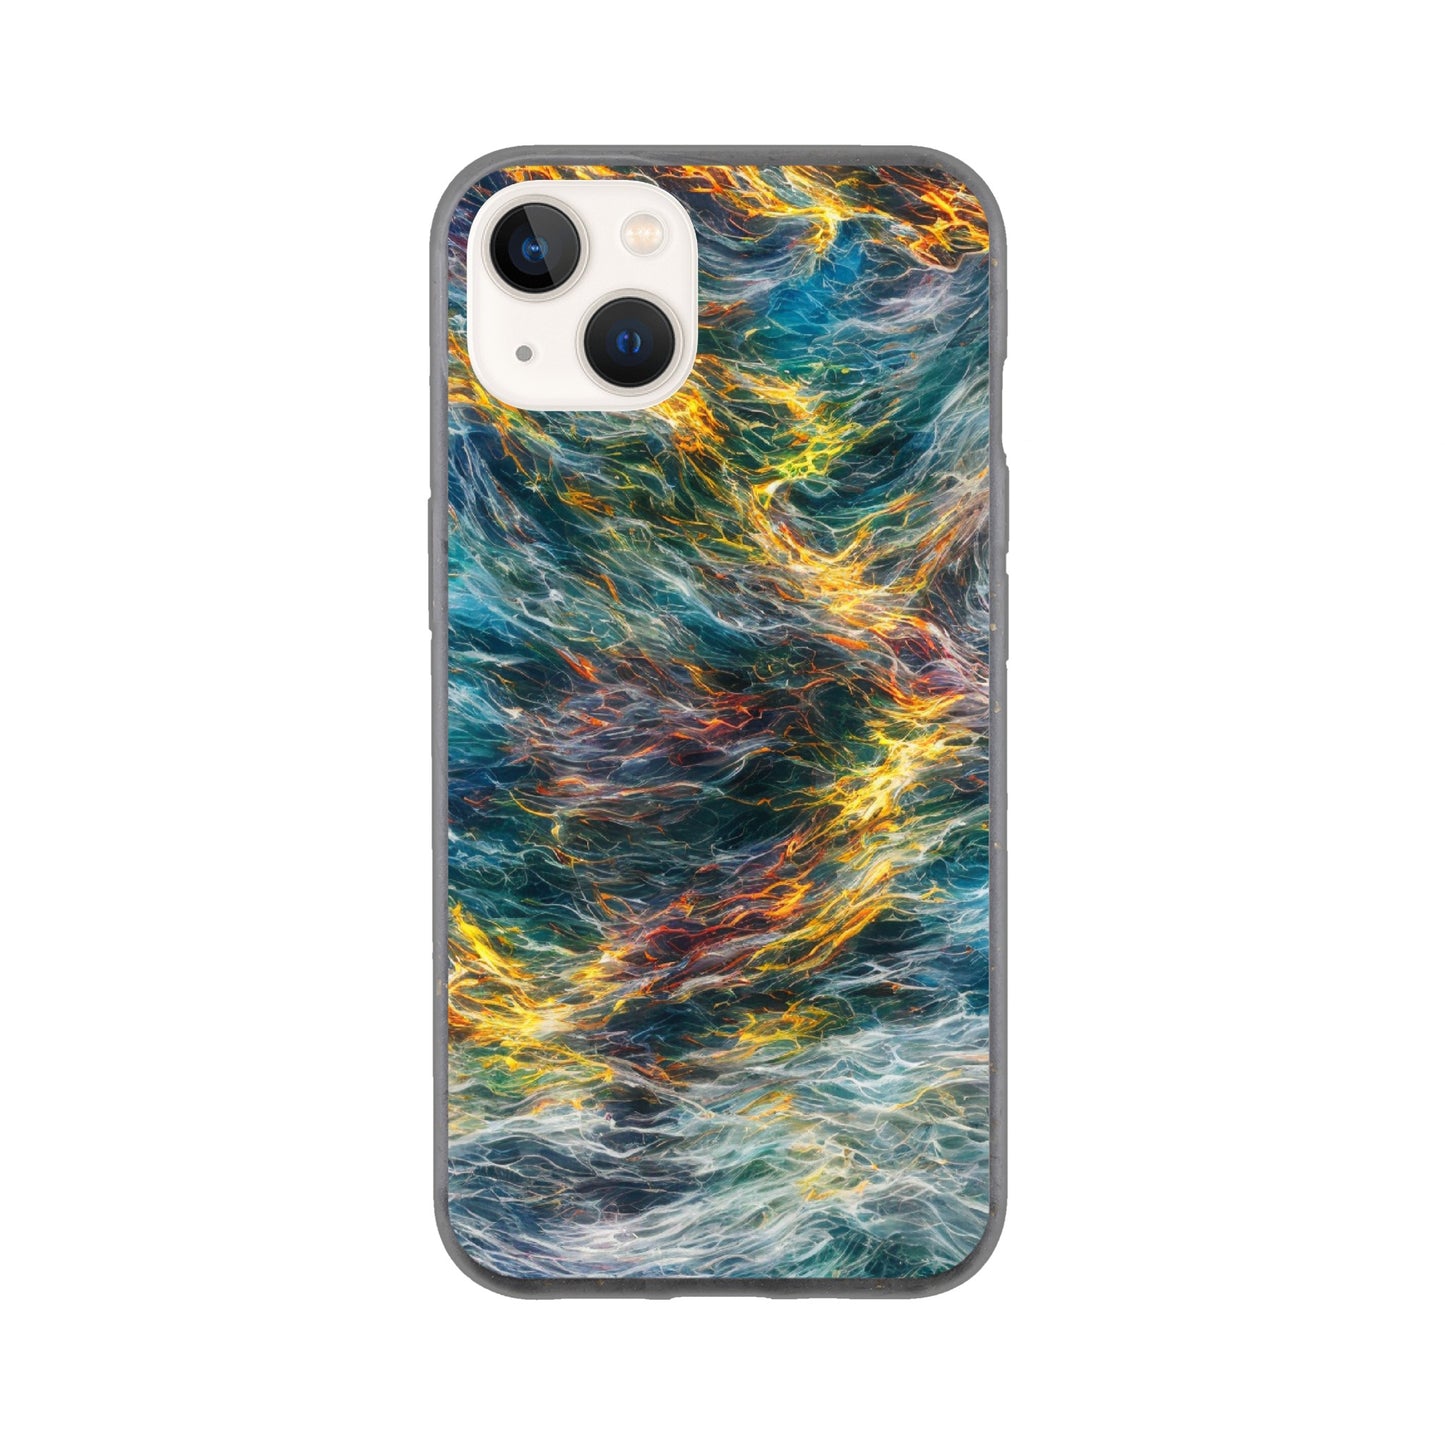 Distorted Universe : Bio iphone case